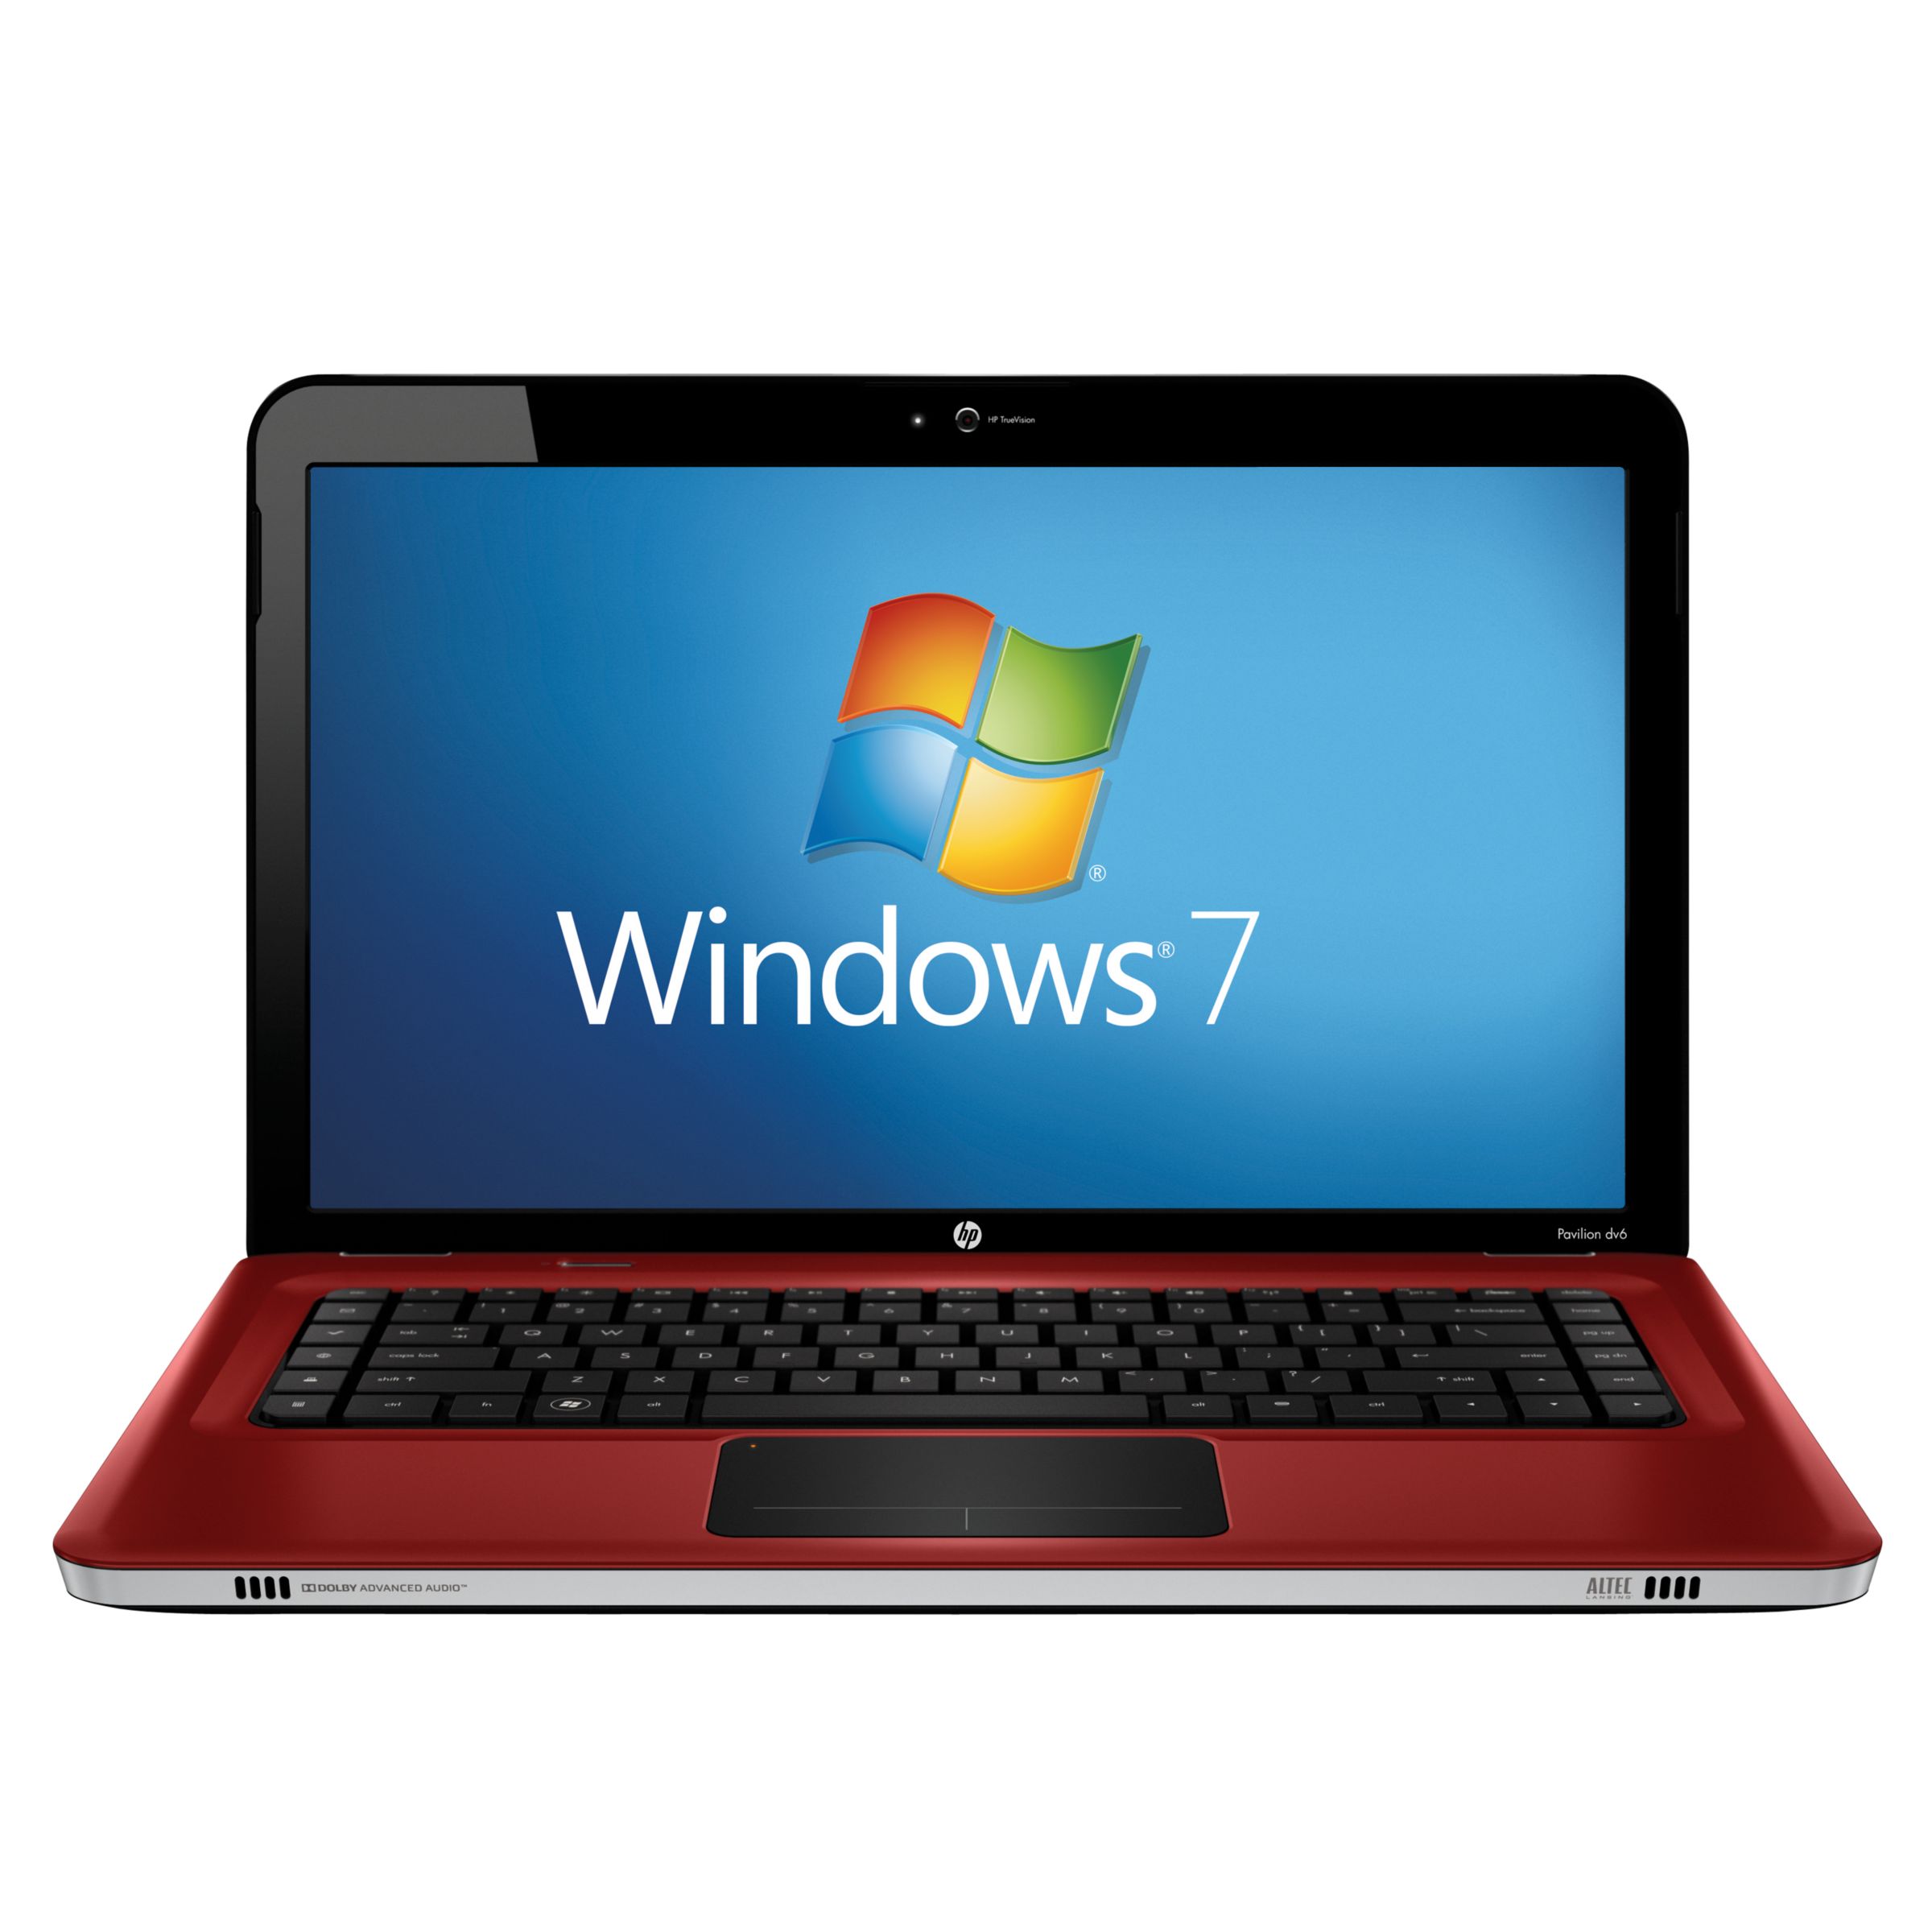 HP Pavilion DV6-3121SA Laptop, AMD Turion, 500GB, 2.4GHz, 6GB RAM with 15.6 Inch Display, Red at John Lewis